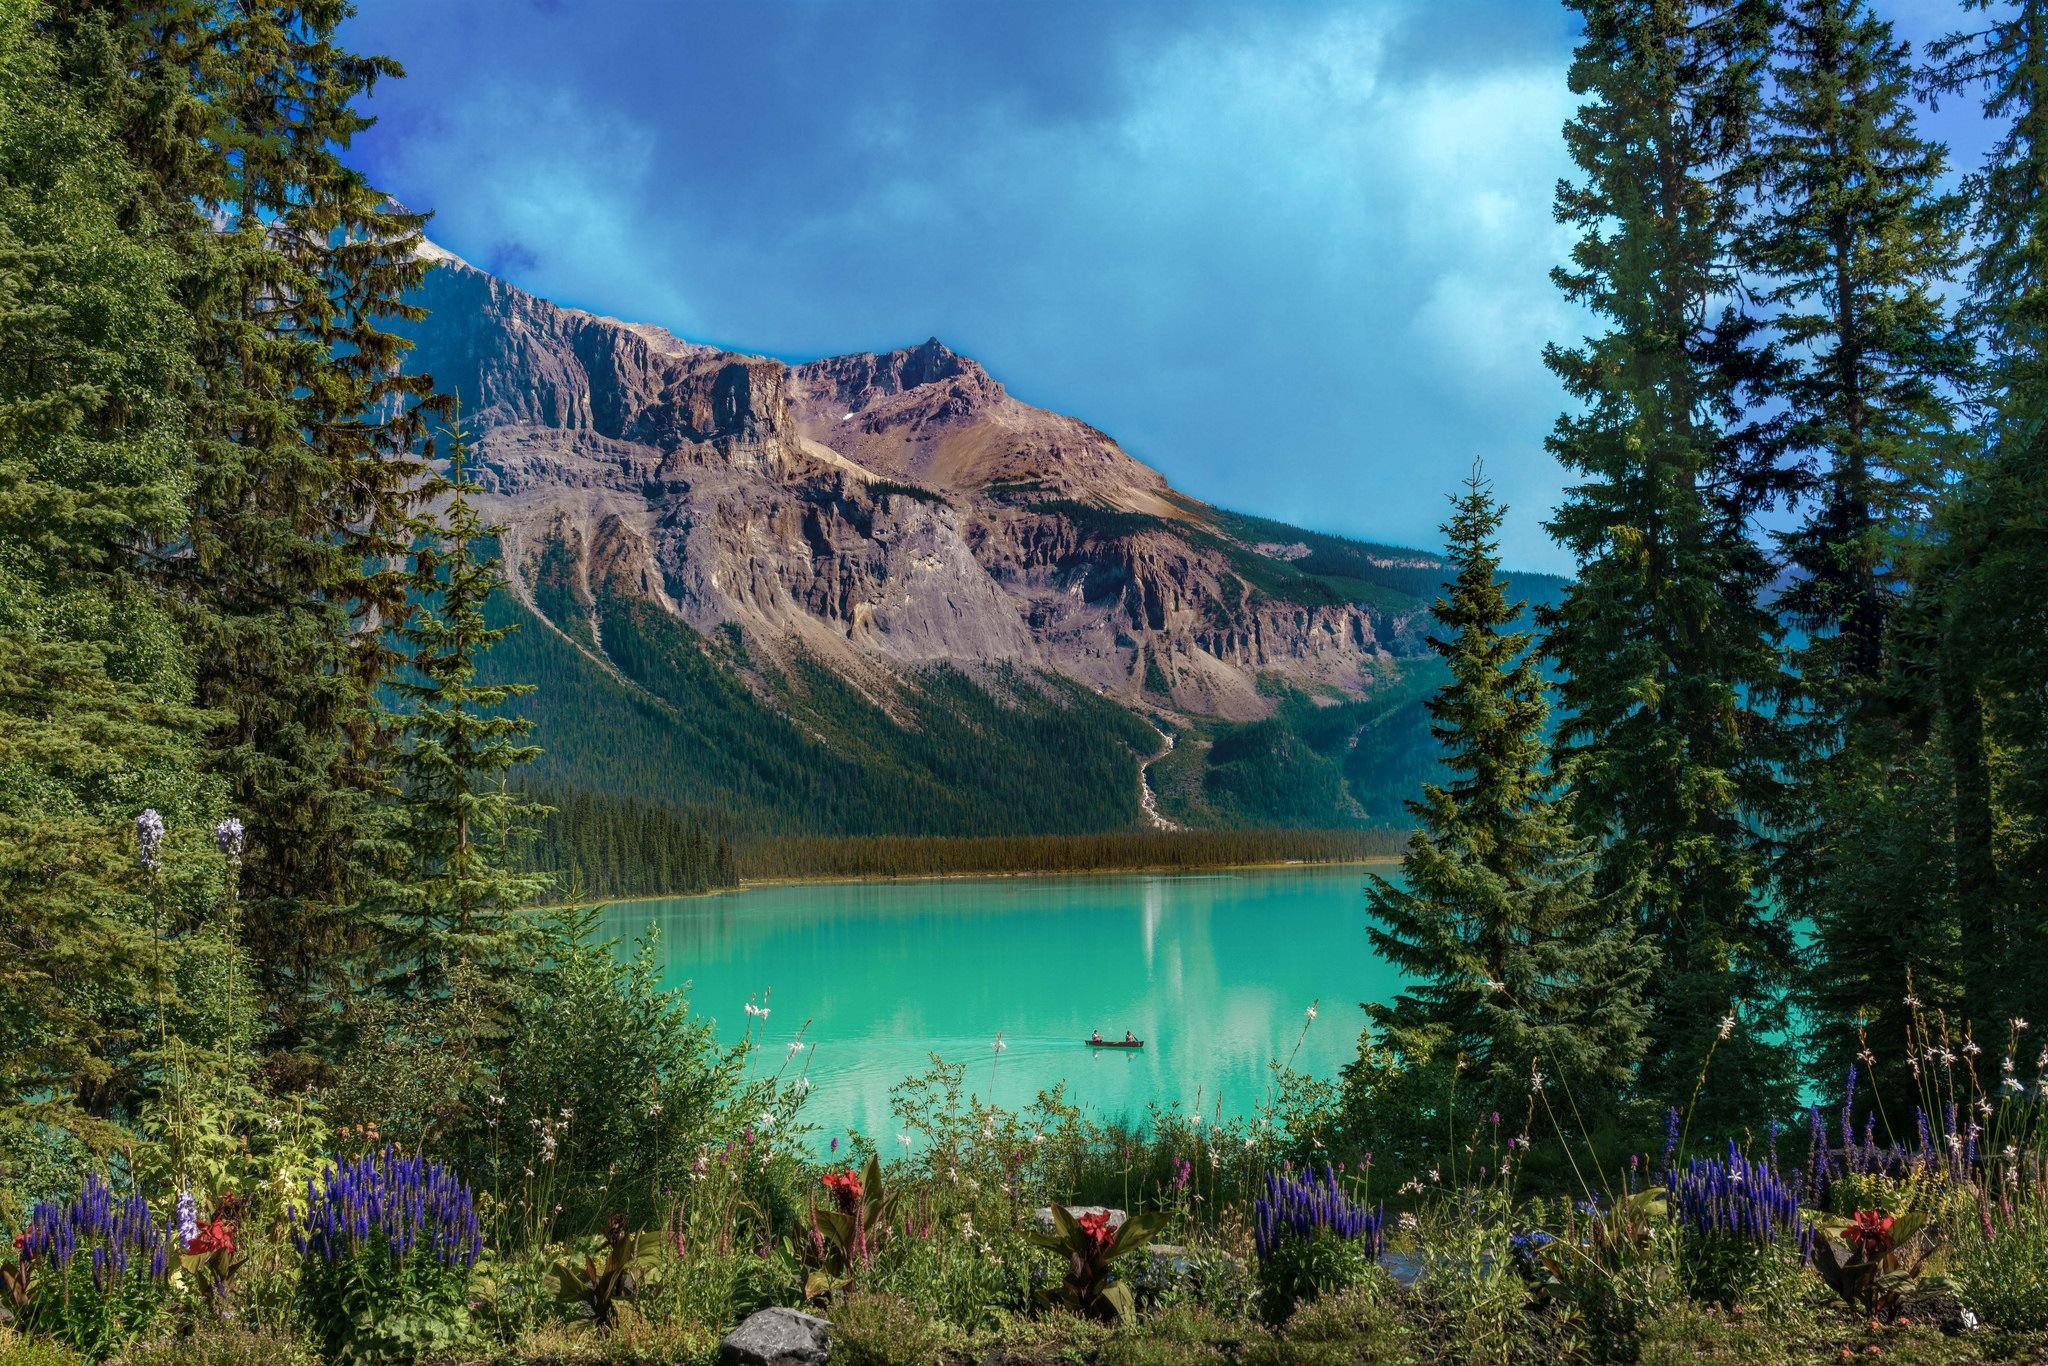 Photos for free landscape, Emerald Lake, mountains the desktop